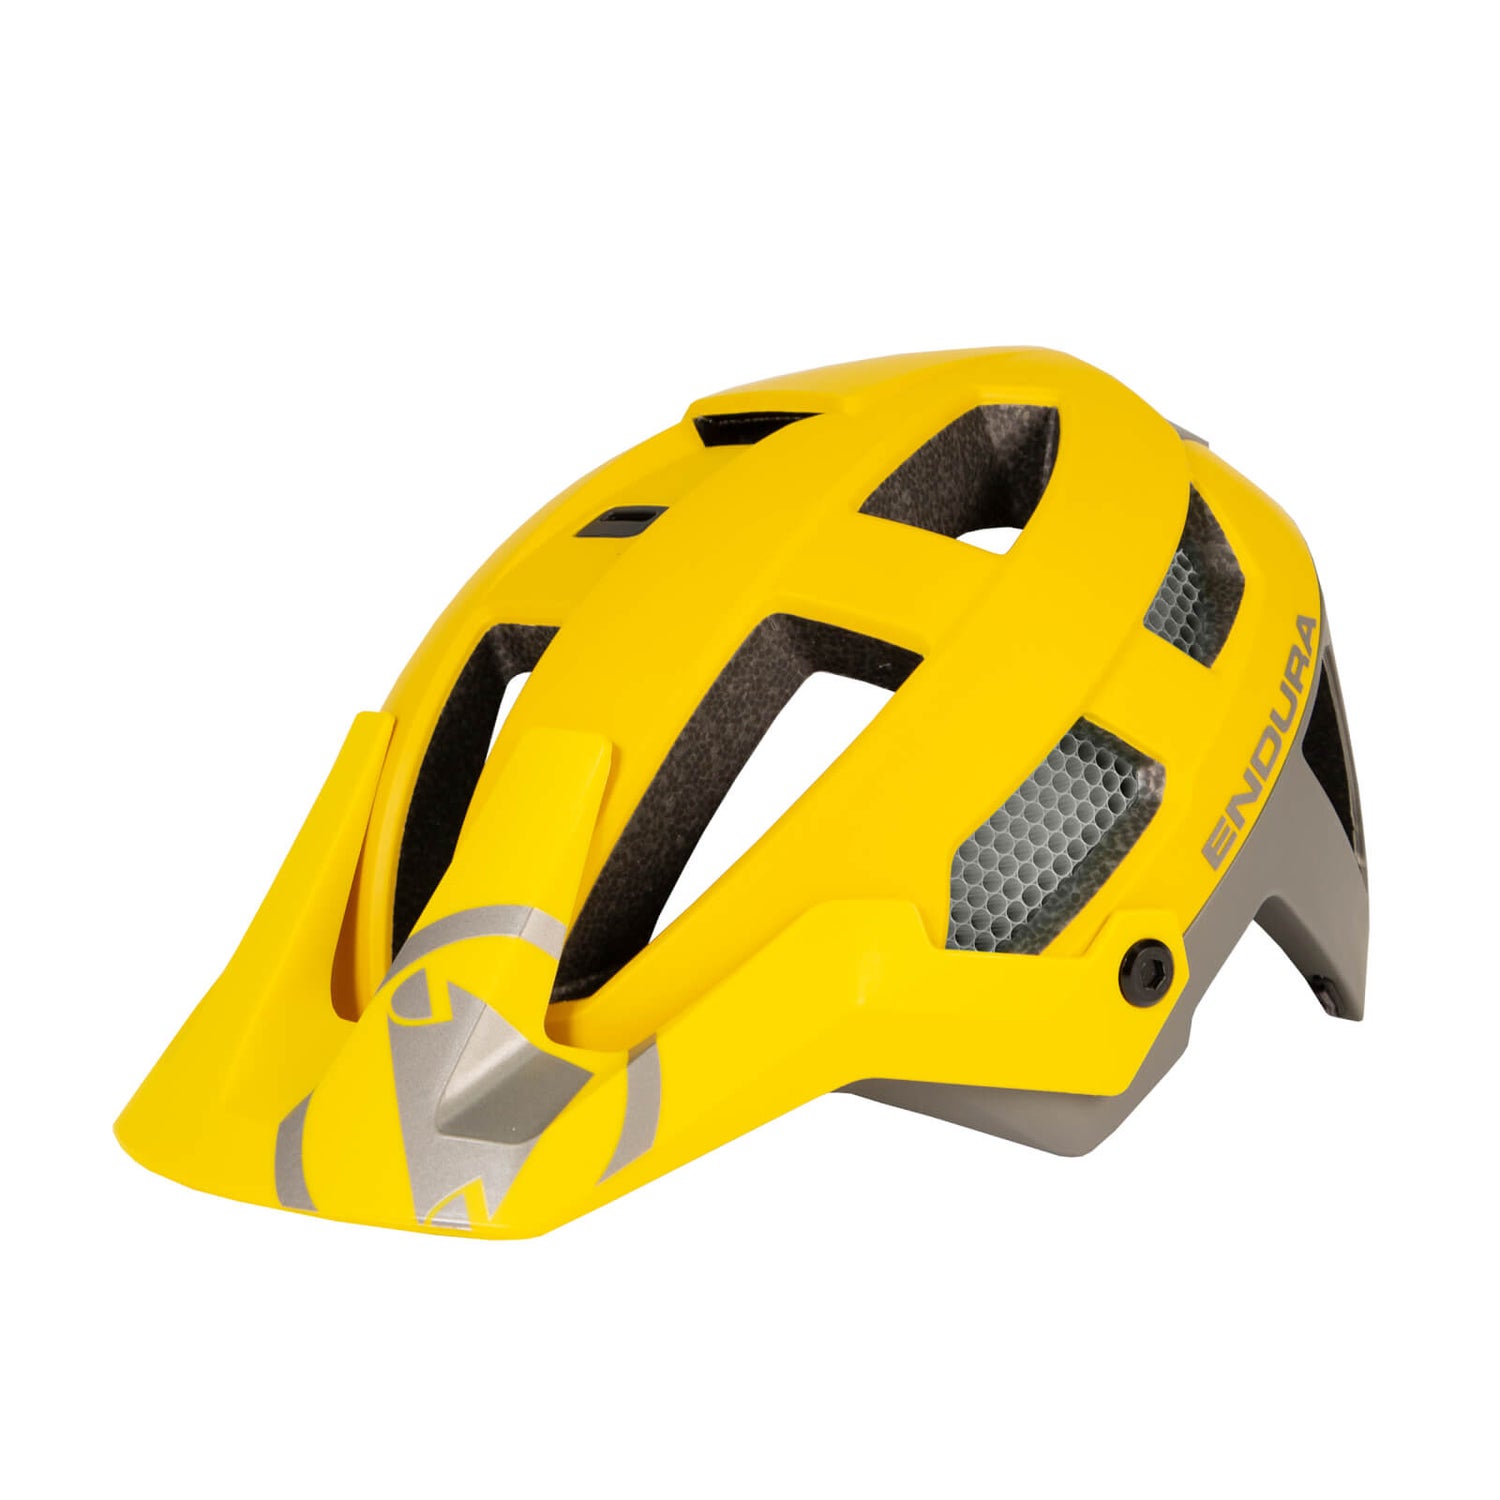 Men's SingleTrack Helmet - Saffron - S-M